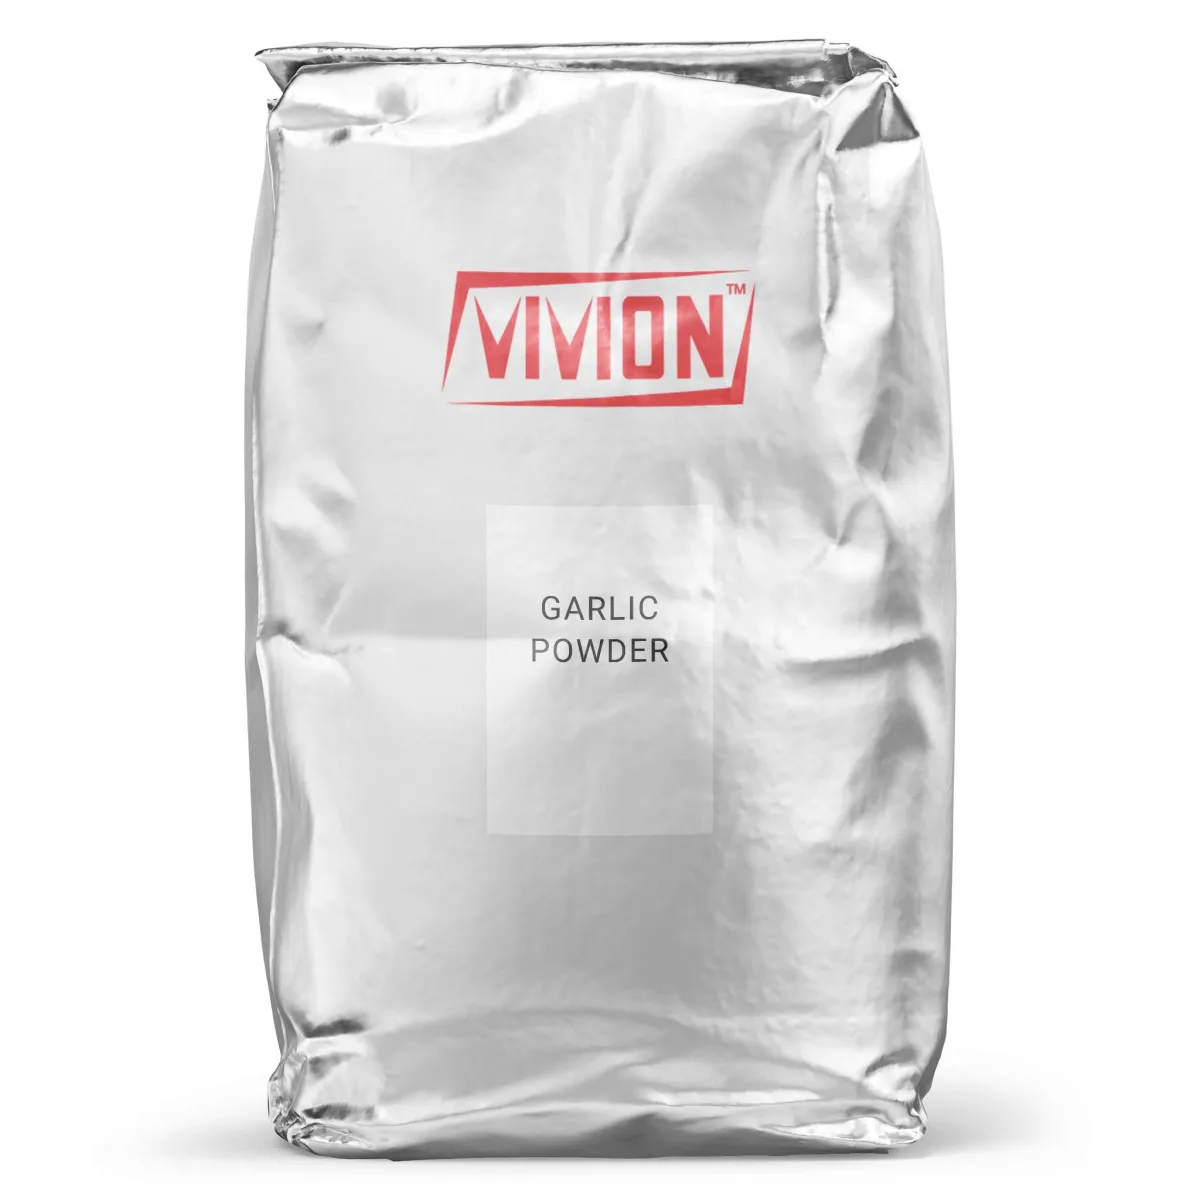 A bag of Vivion's wholesale Garlic Powder.